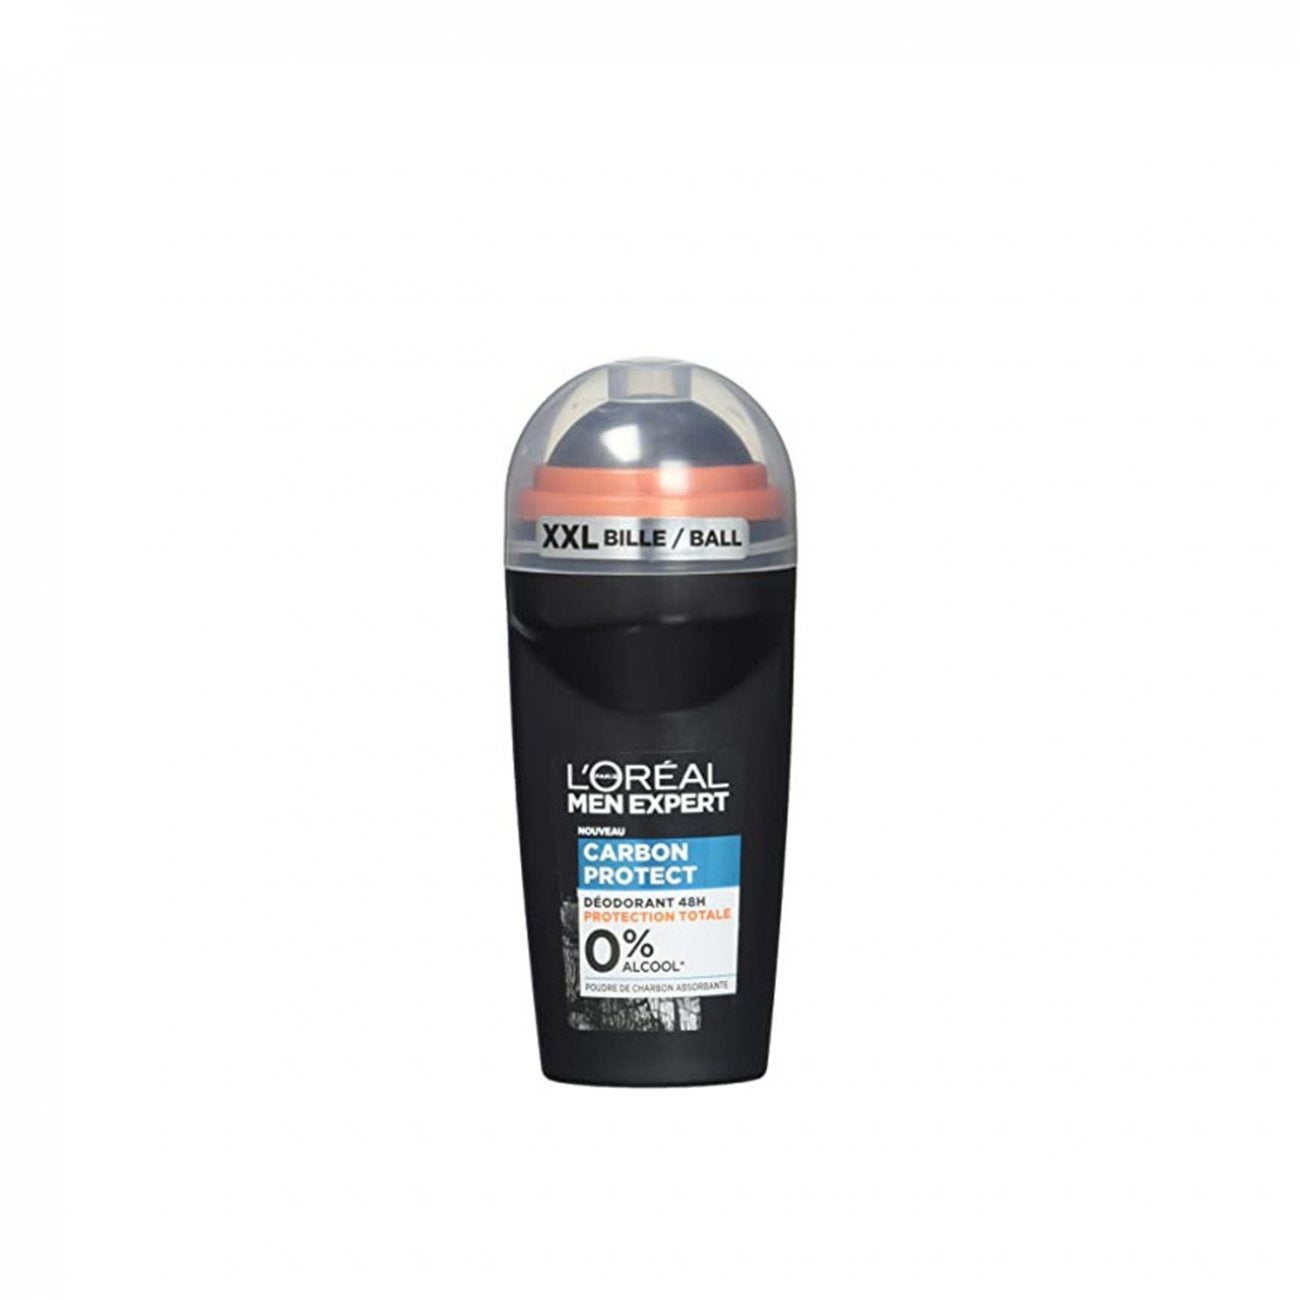 L'Oréal Paris Men Expert Carbon Protect 48h Deodorant 50ml